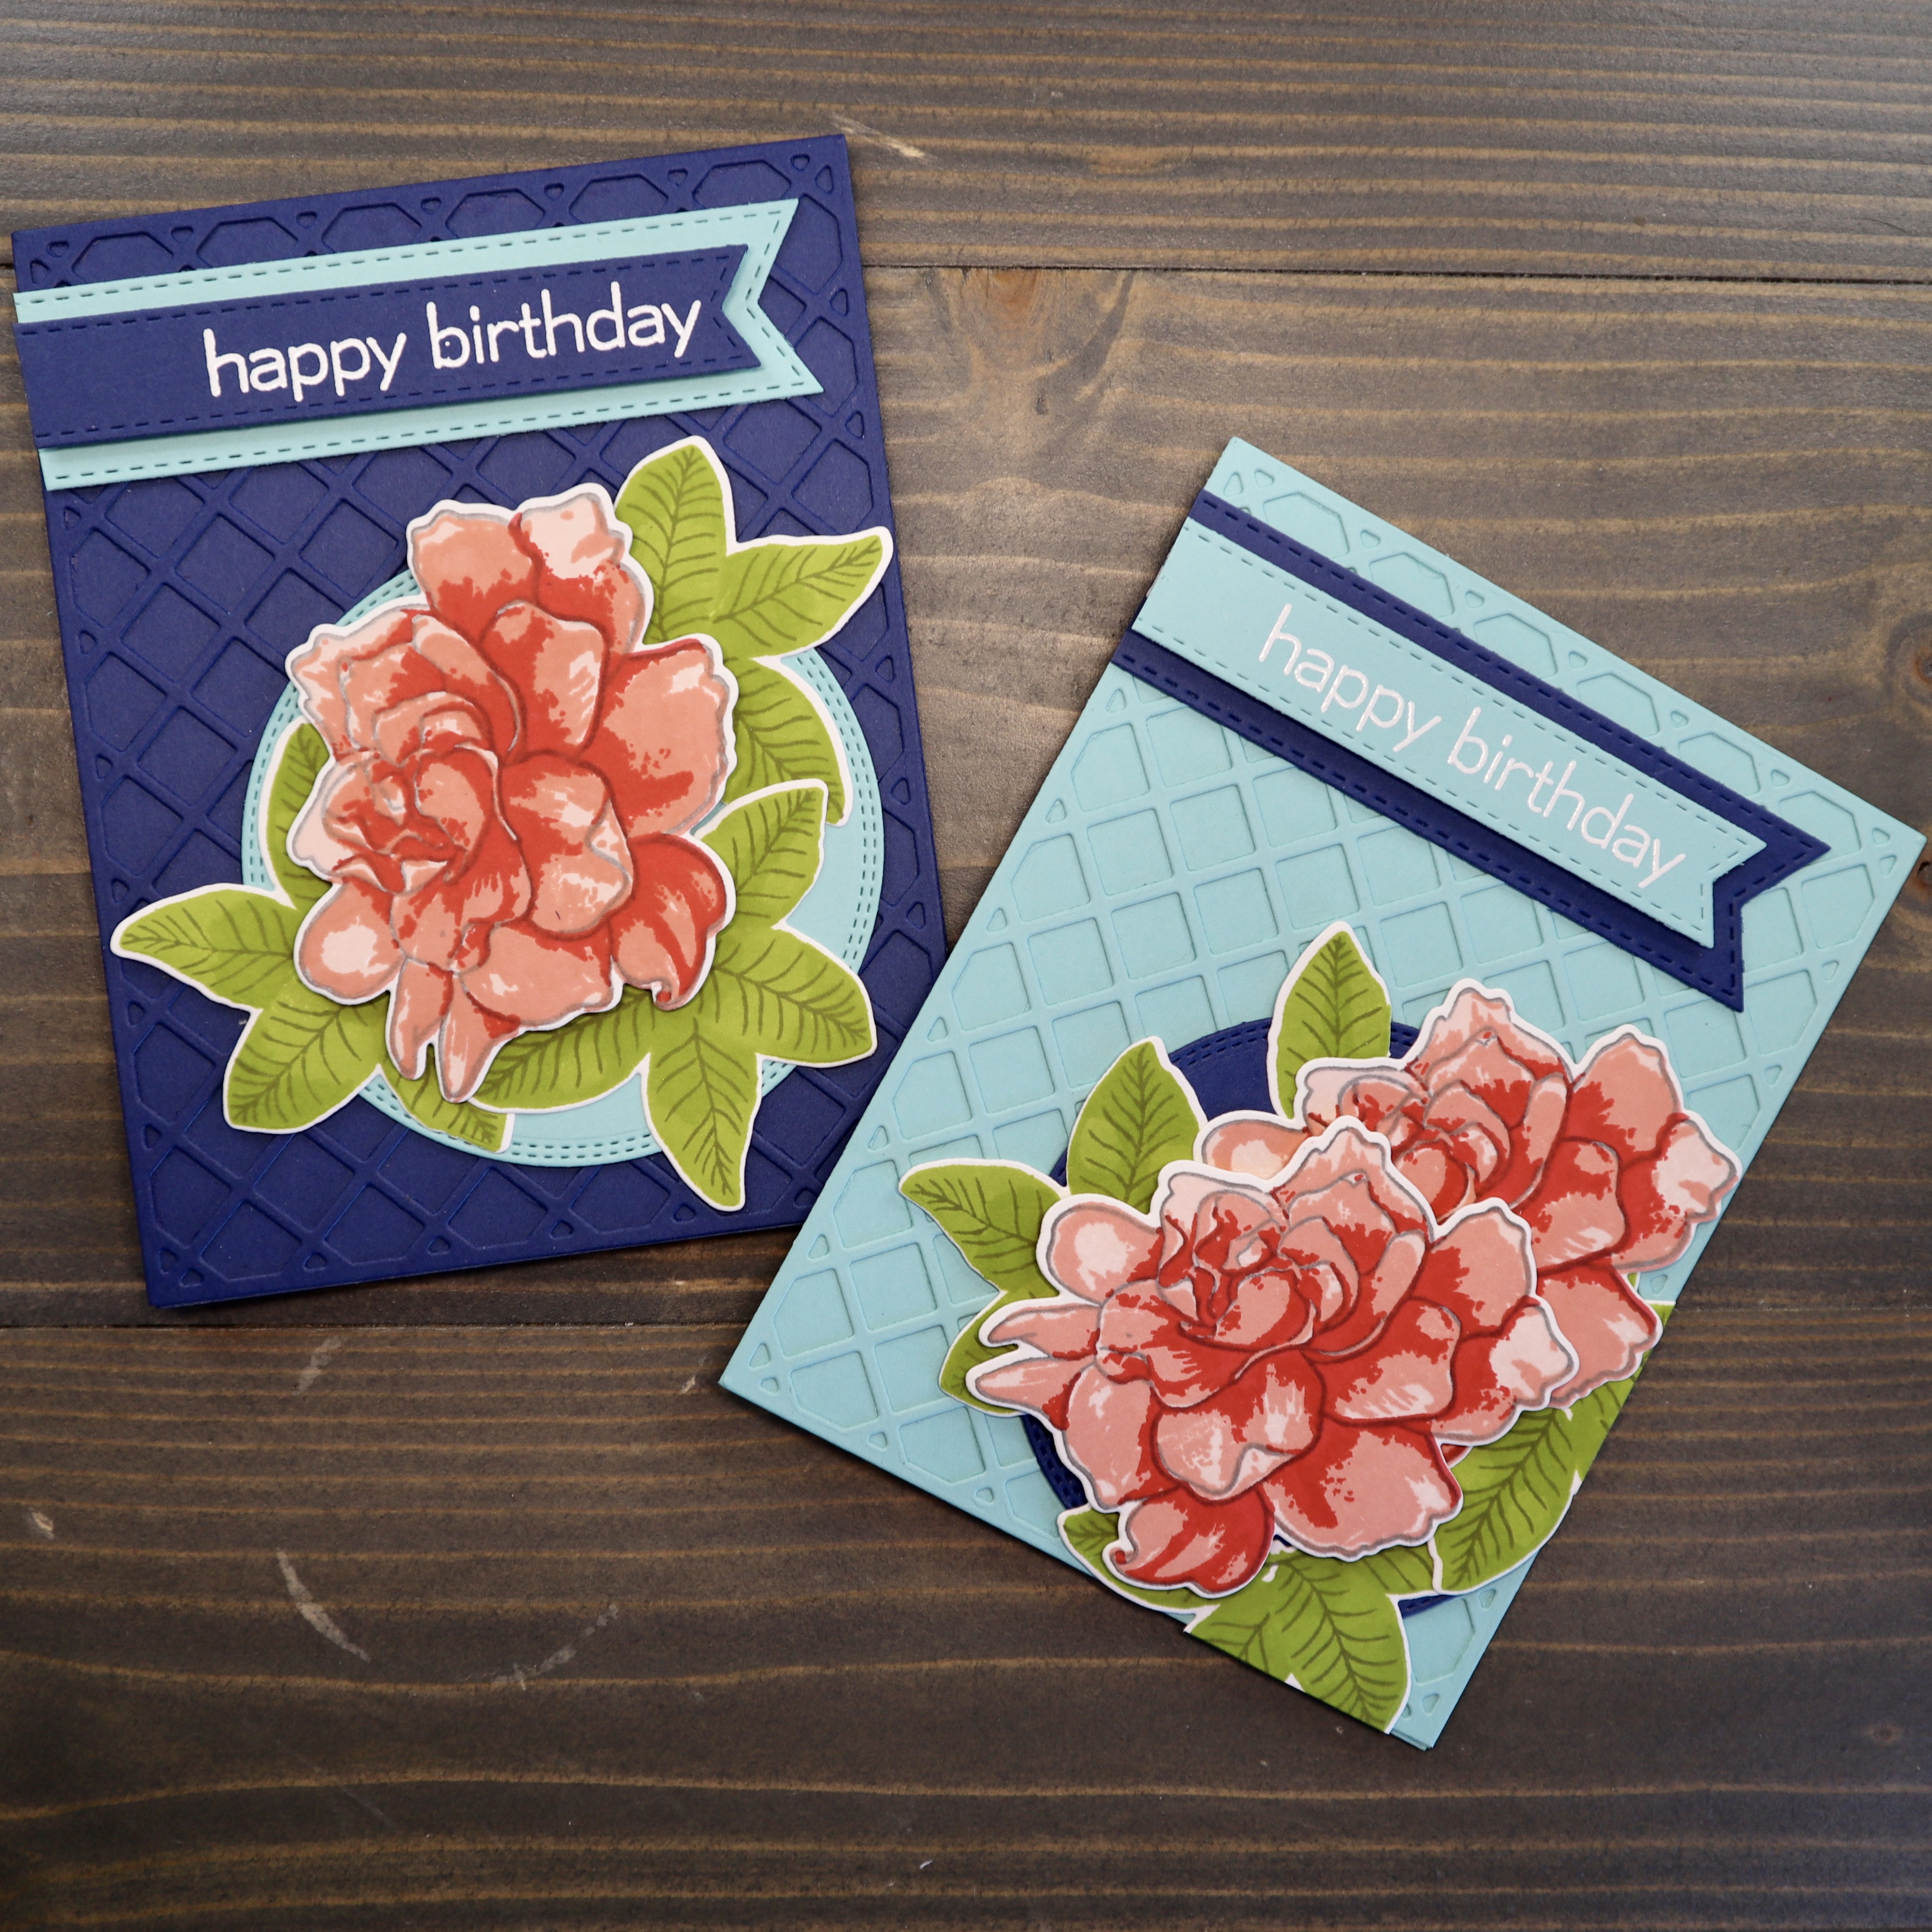 Free Printable Floral Birthday Cards